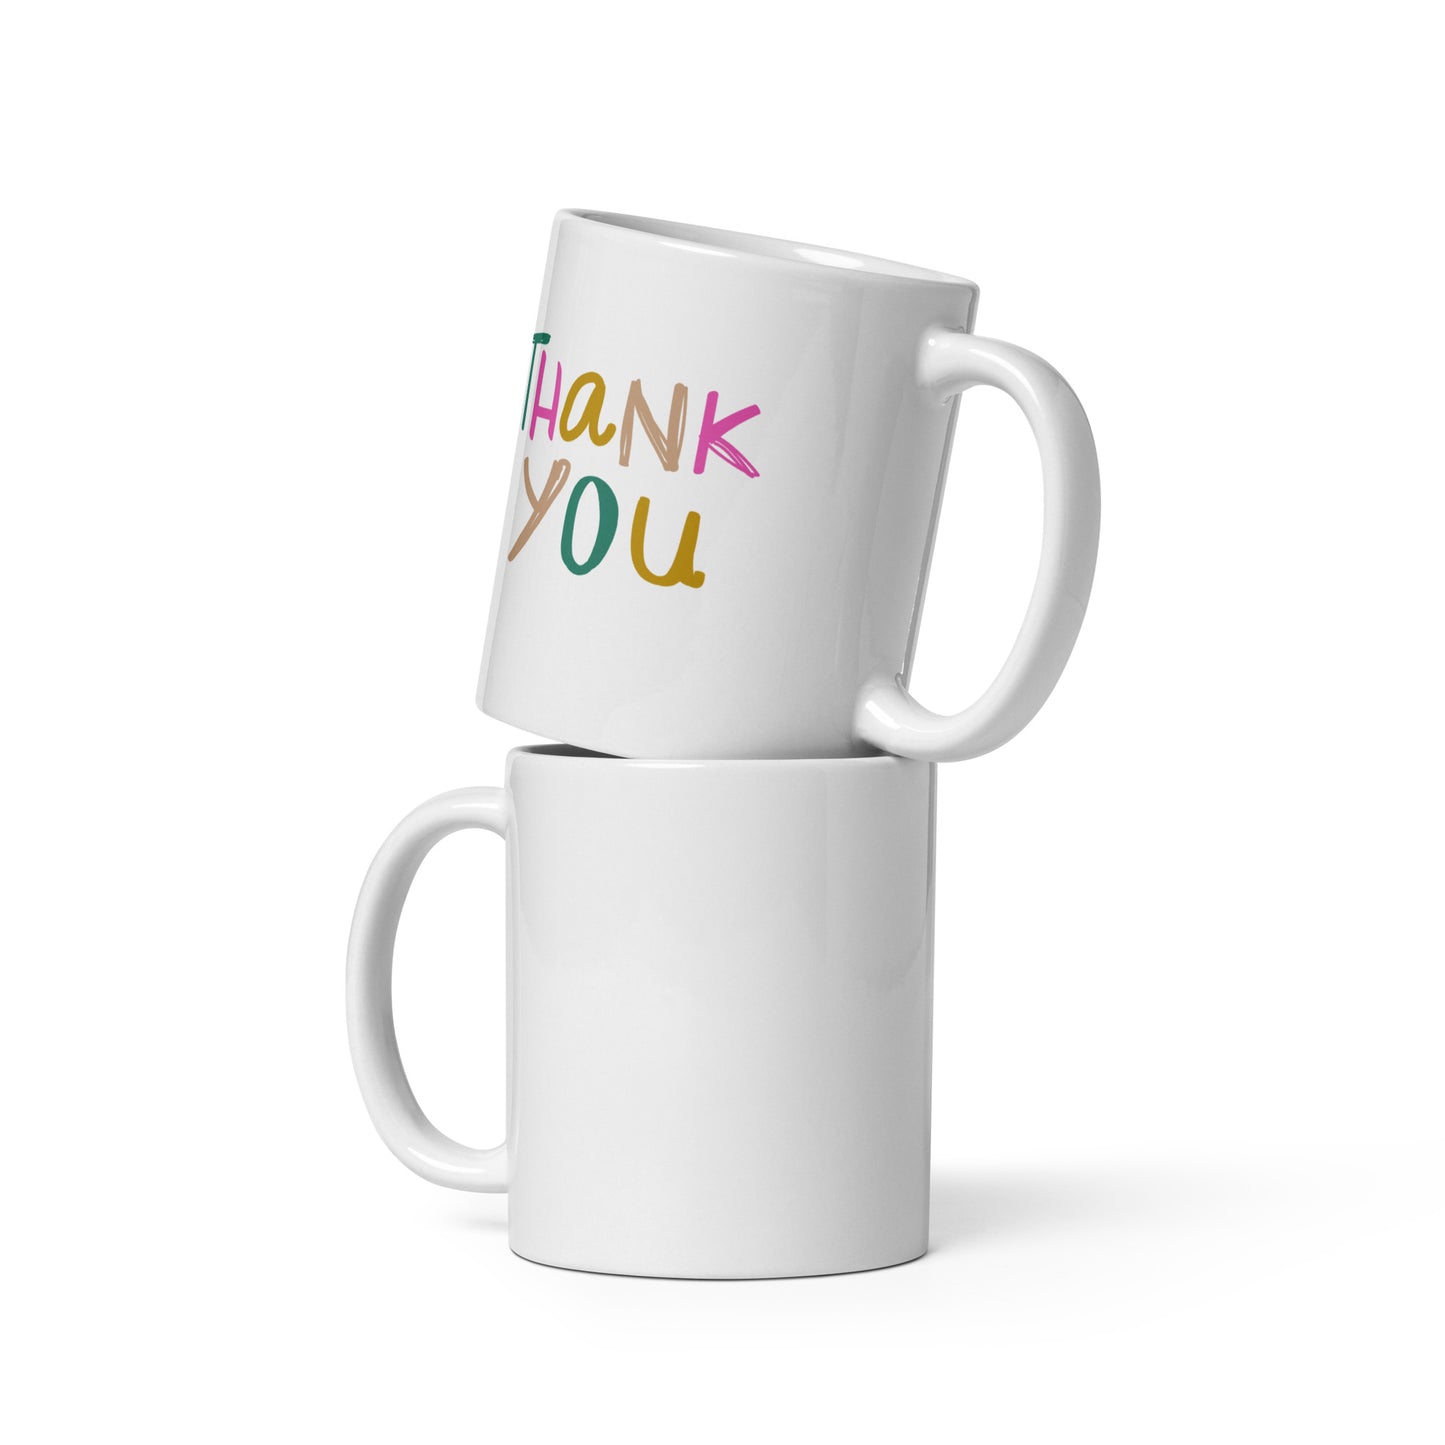 Thank You - White glossy mug